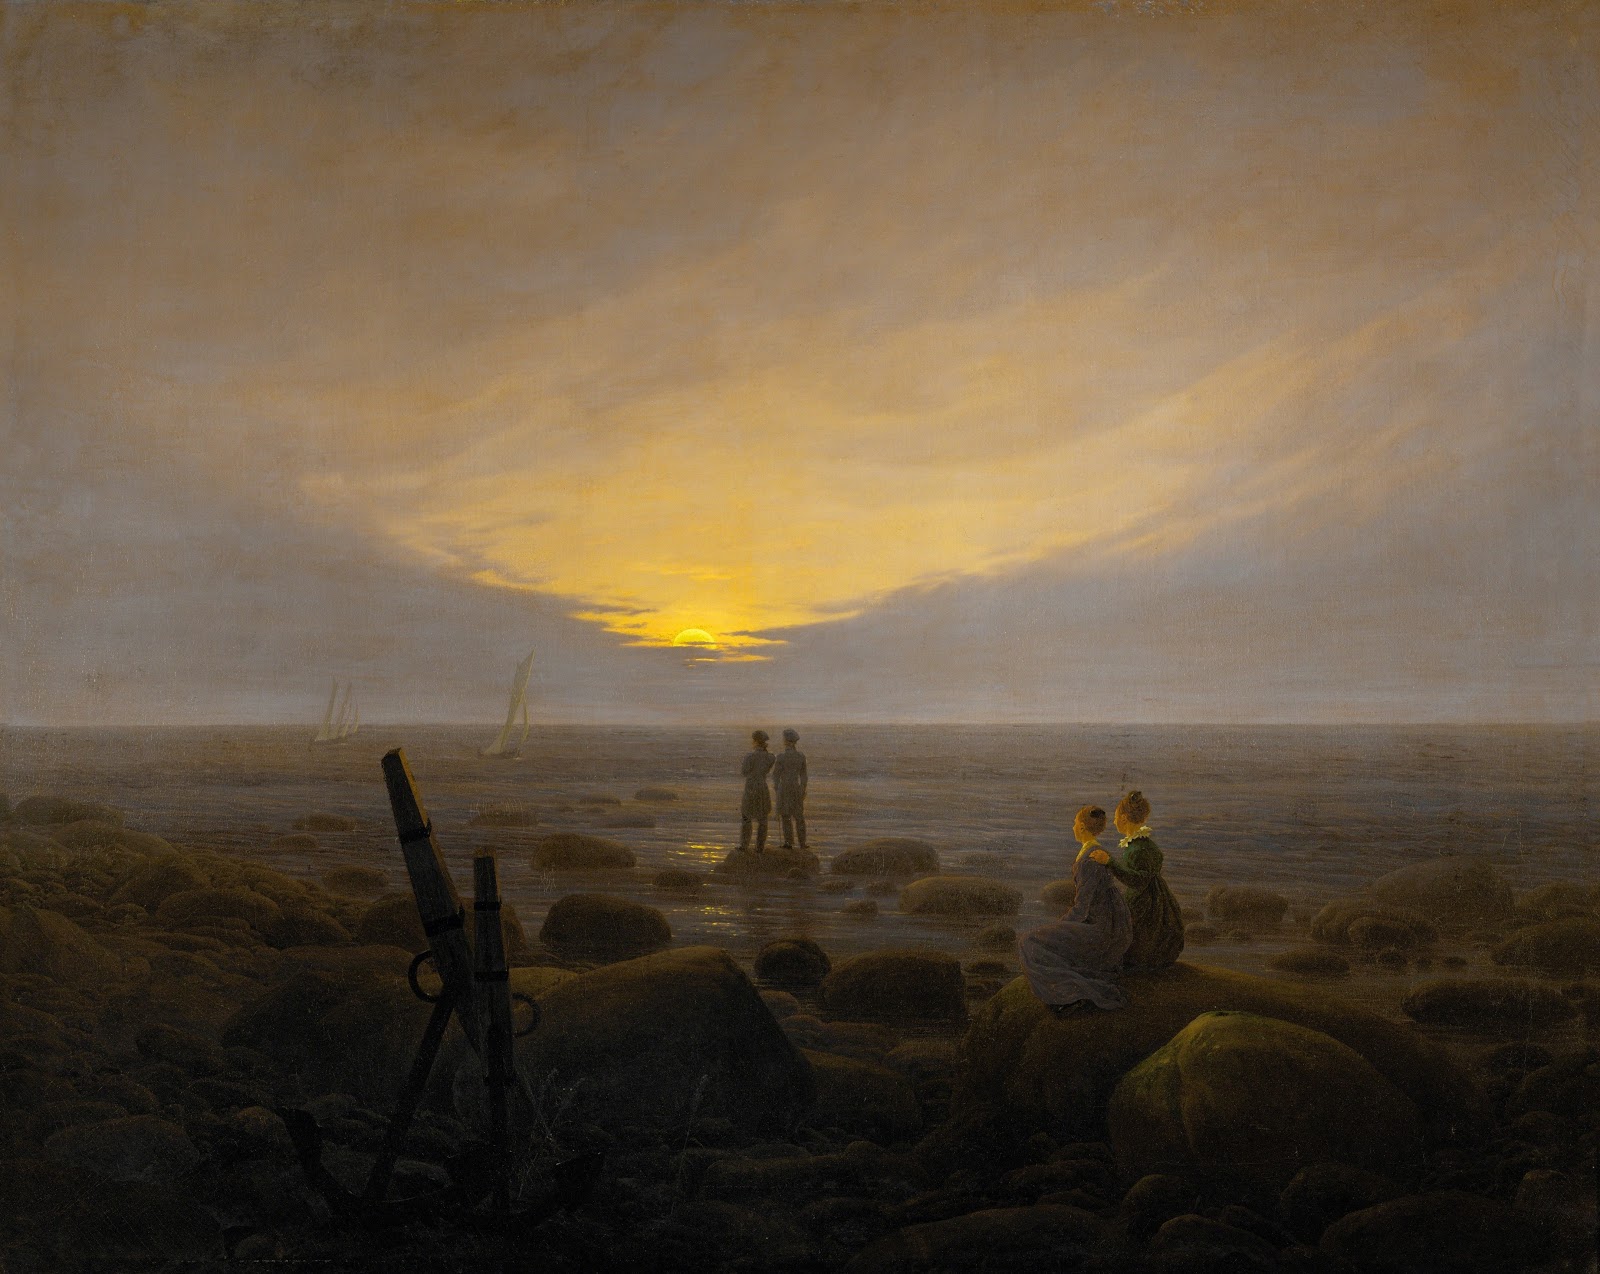 Caspar David Friedrich | Pintura romântica alemã